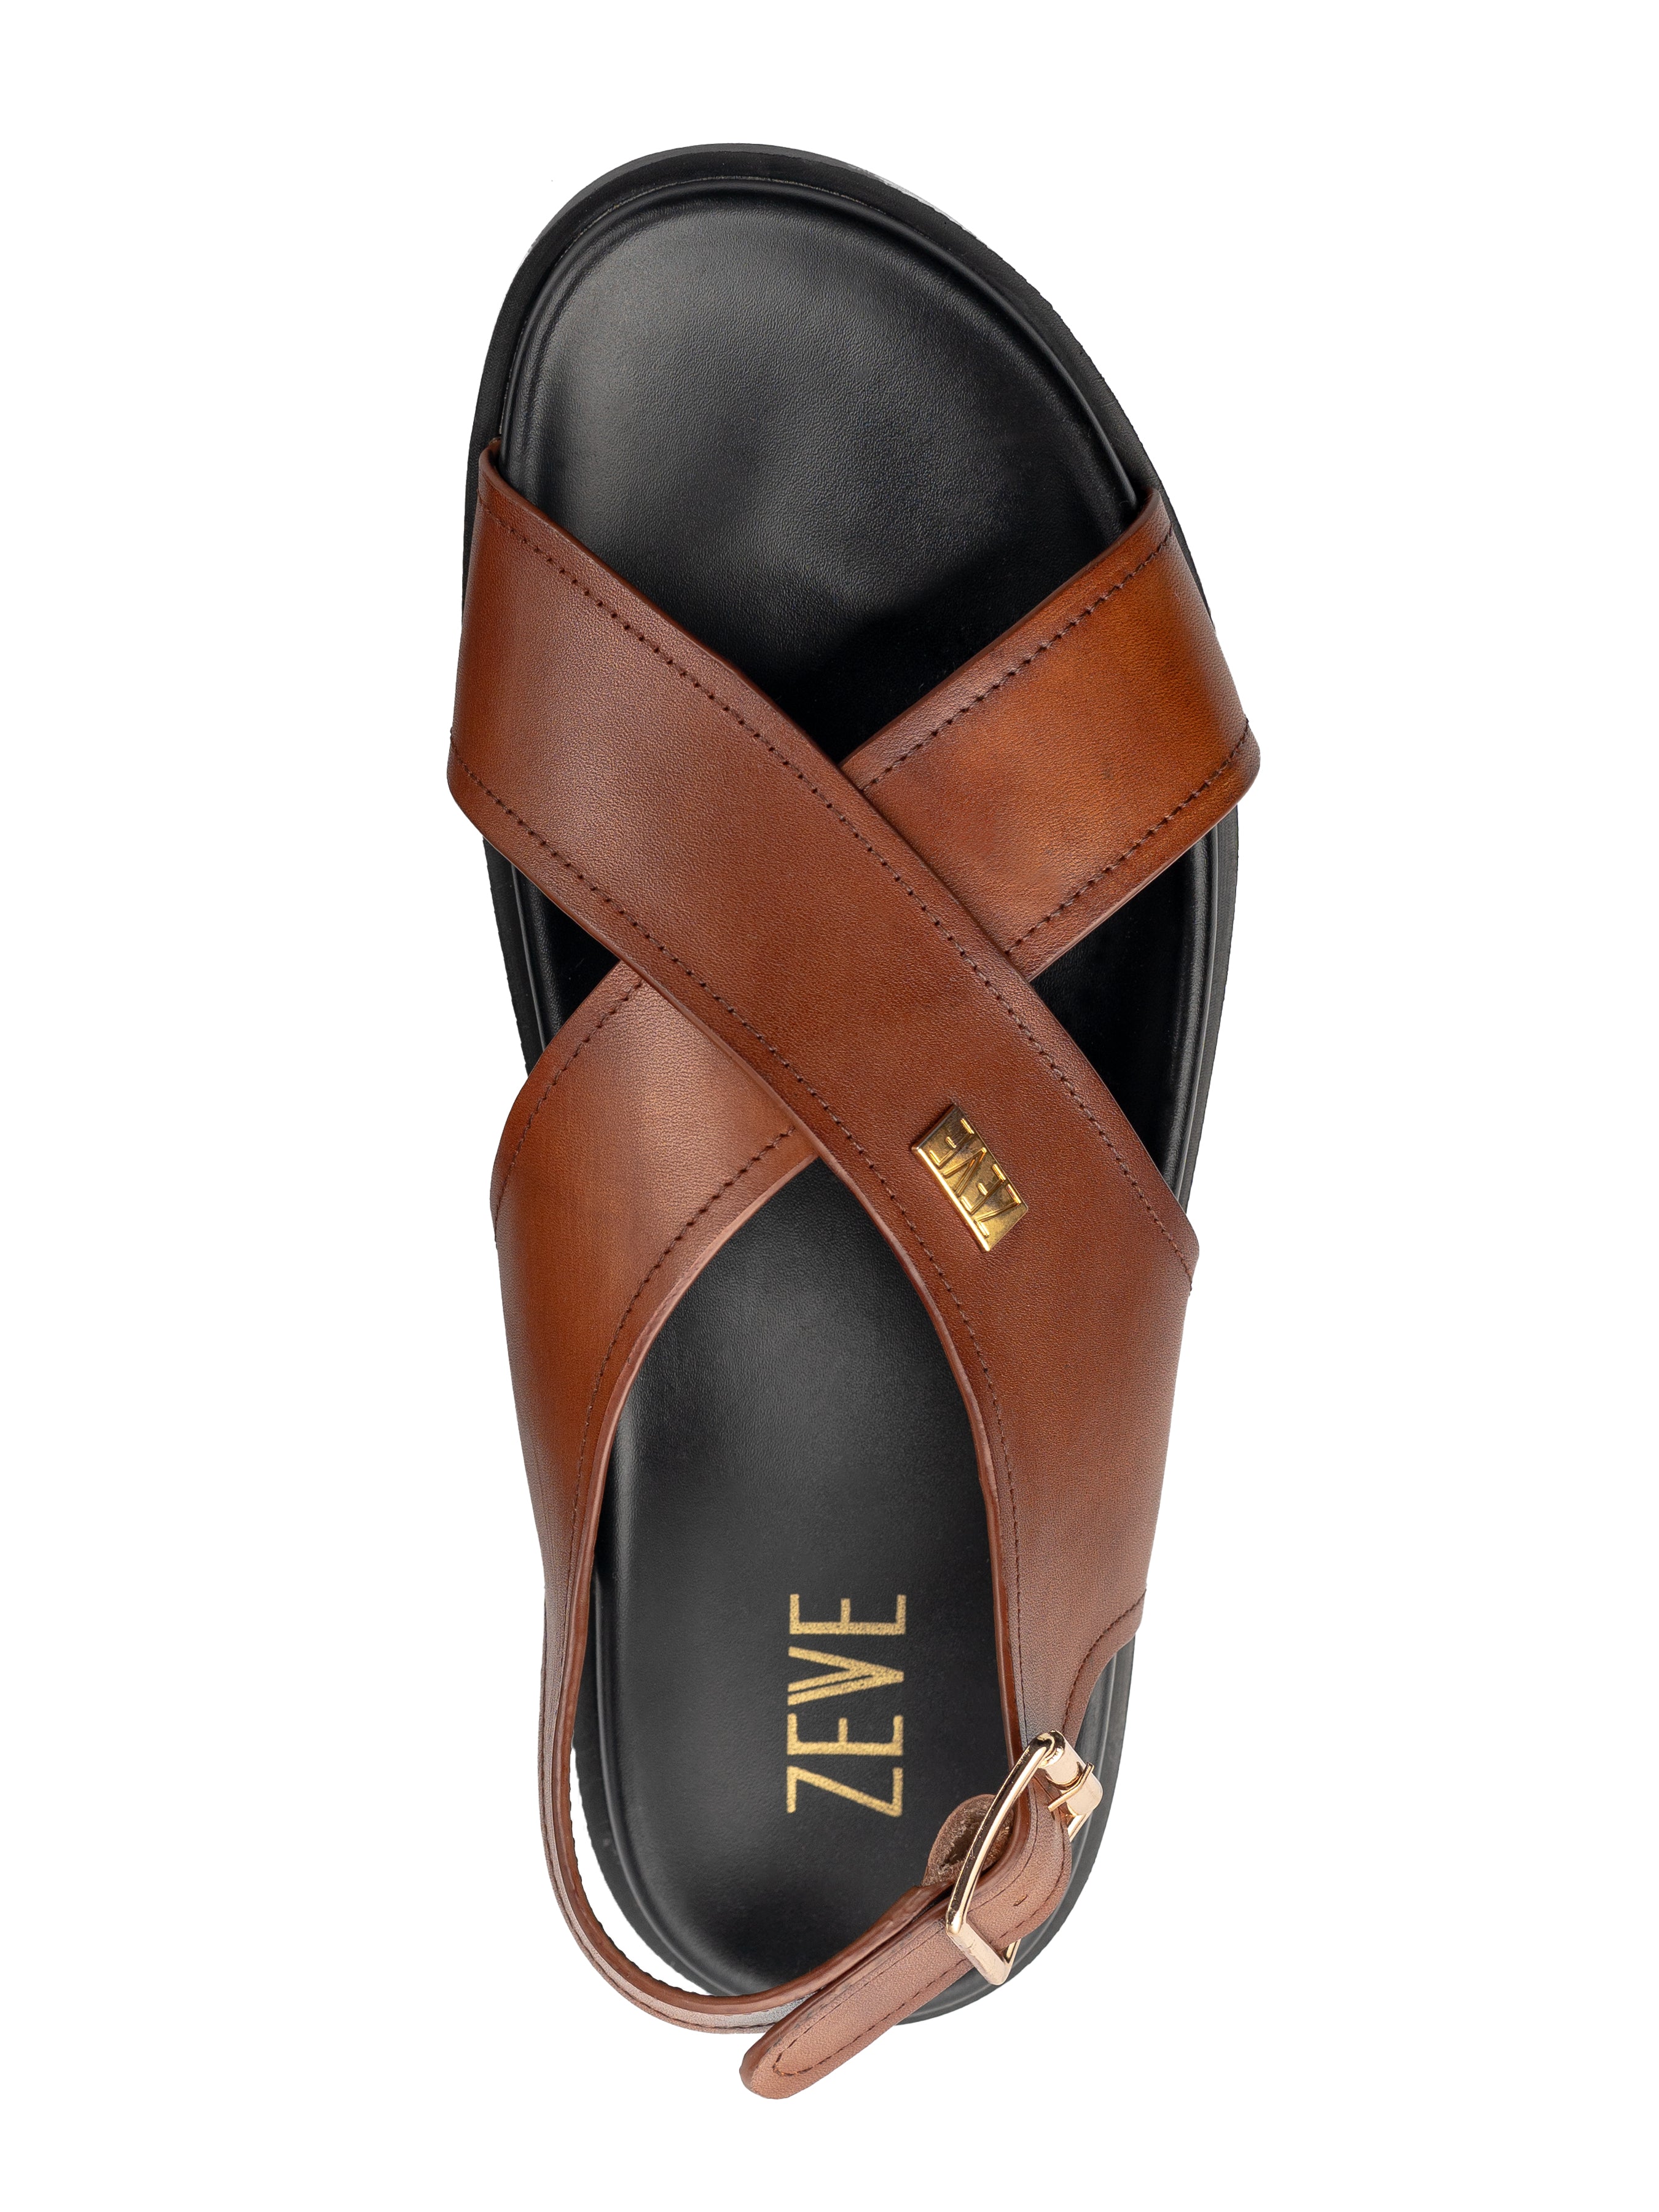 Slingback Cross Strap Sandal - Brown Patina Leather